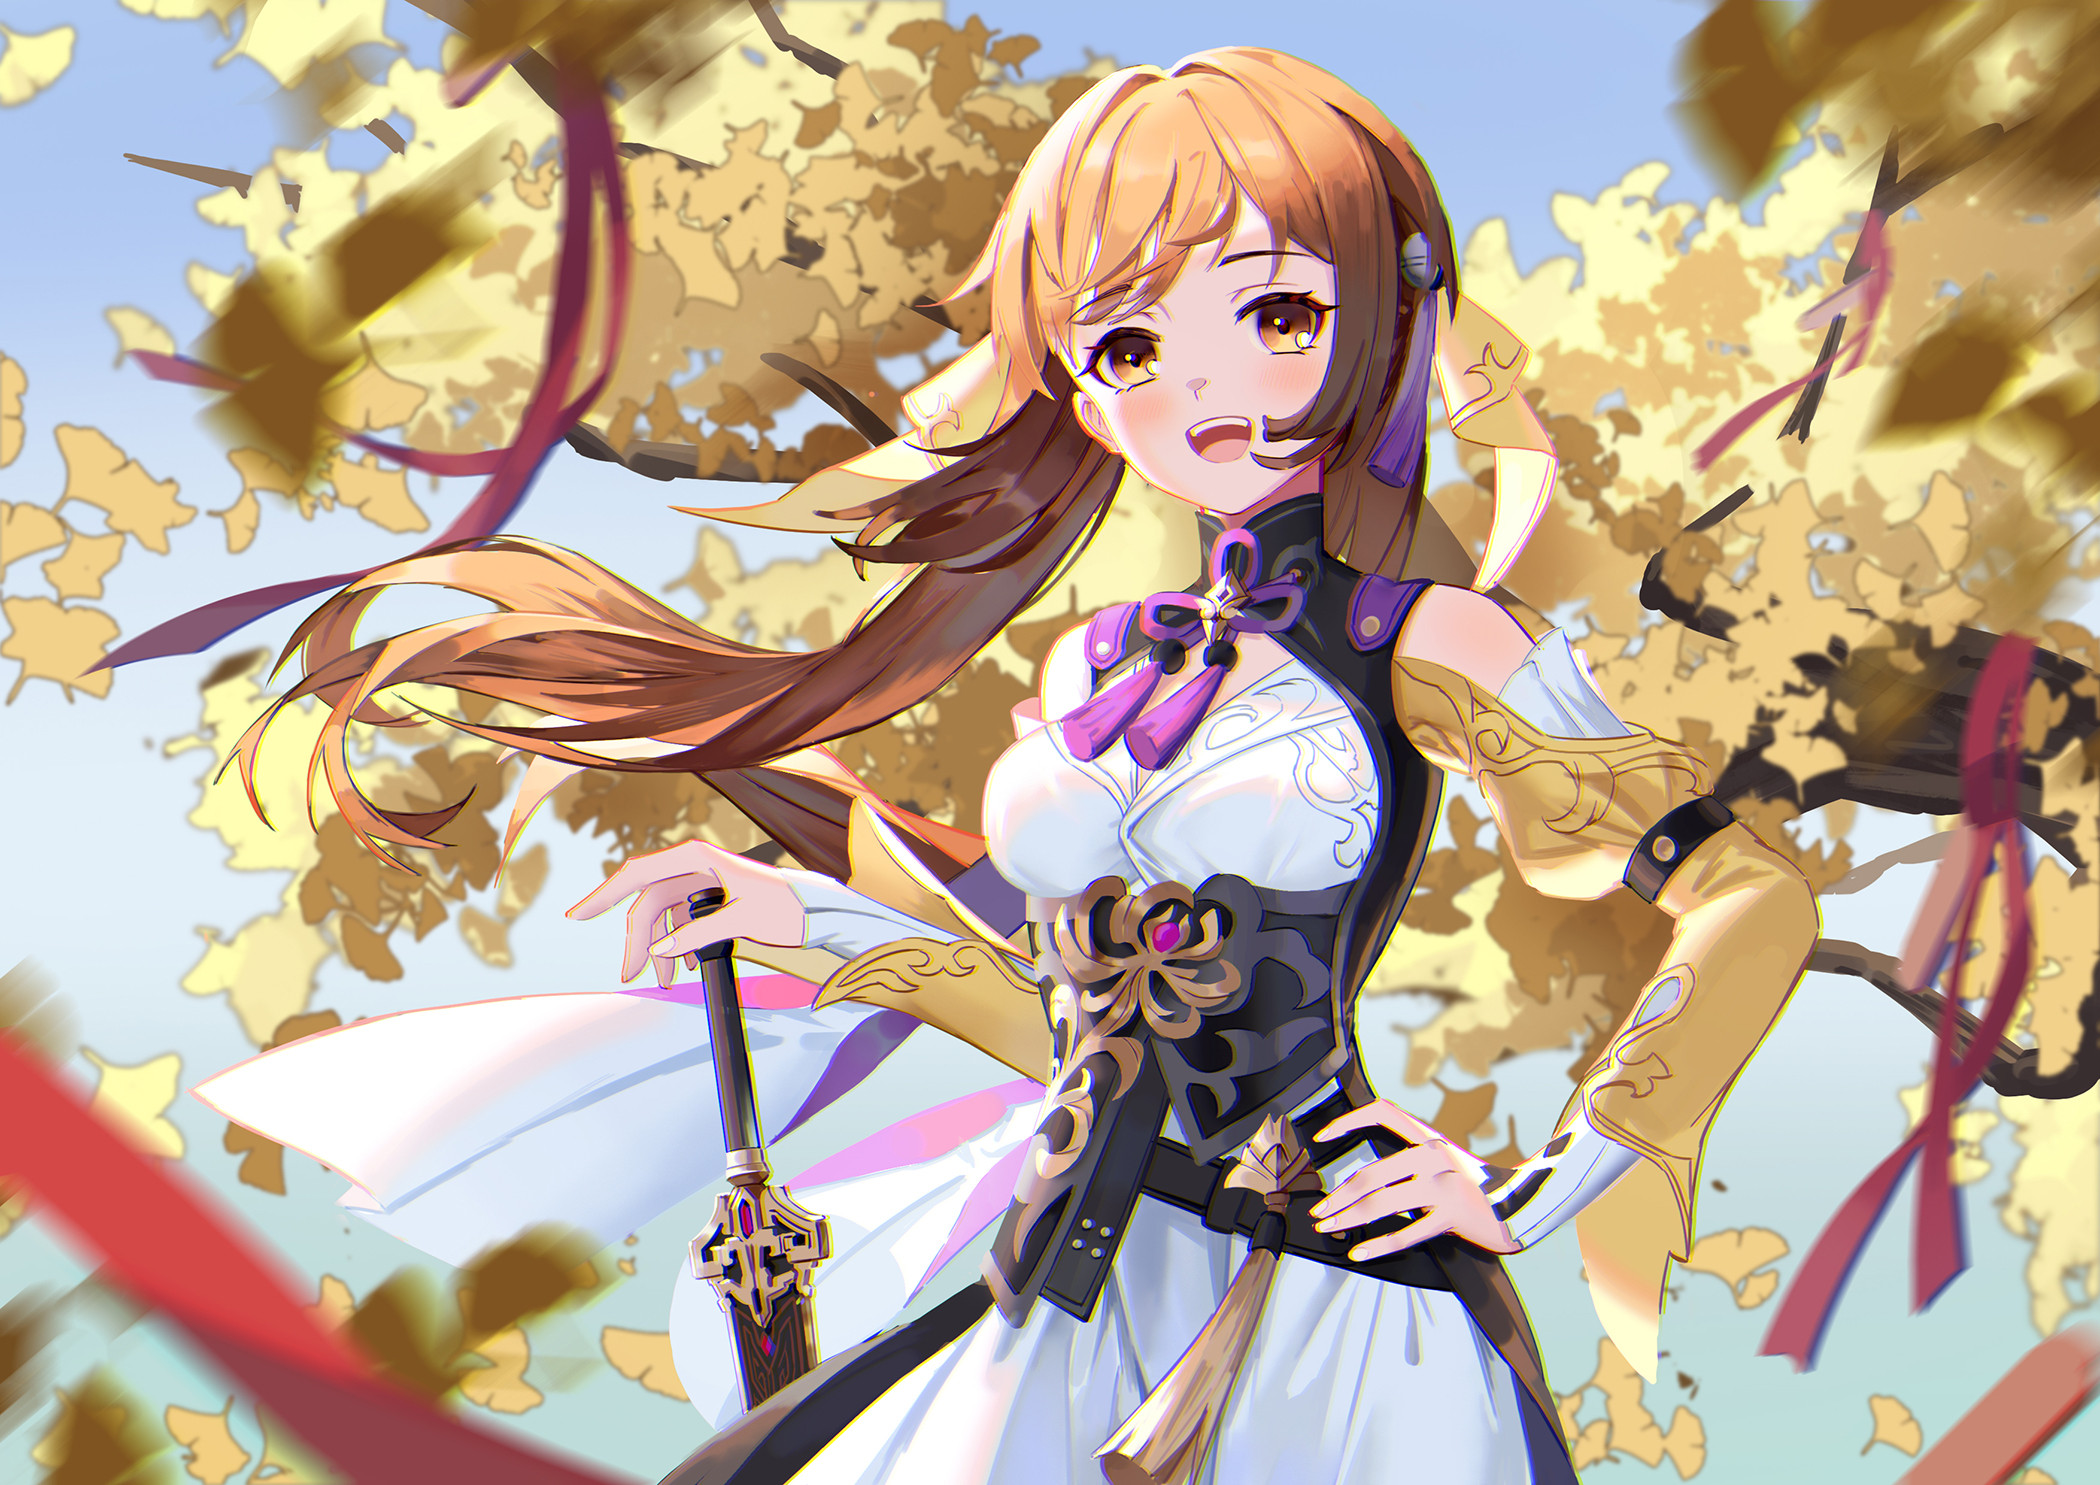 Crop Honkai: Star Rail Wallpapers for Free, Li Sushang, Pretty, Anime Games HD Backgrounds